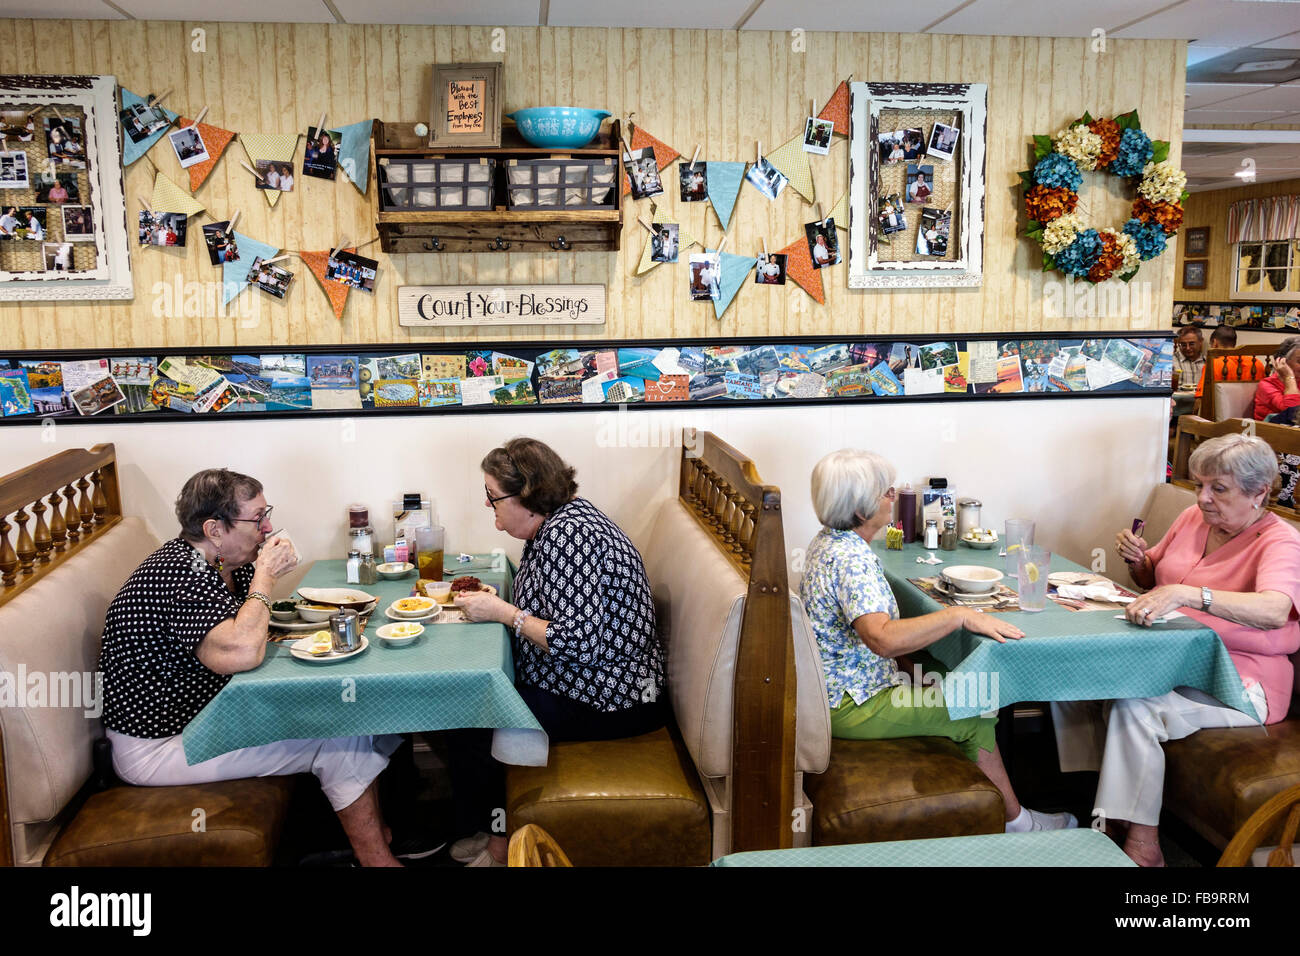 Sarasota Florida,Pinecraft Pine Craft,Amish,community,Yoder's Amish Village Restaurant restaurants food dining eating out cafe cafes bistro,interior i Stock Photo